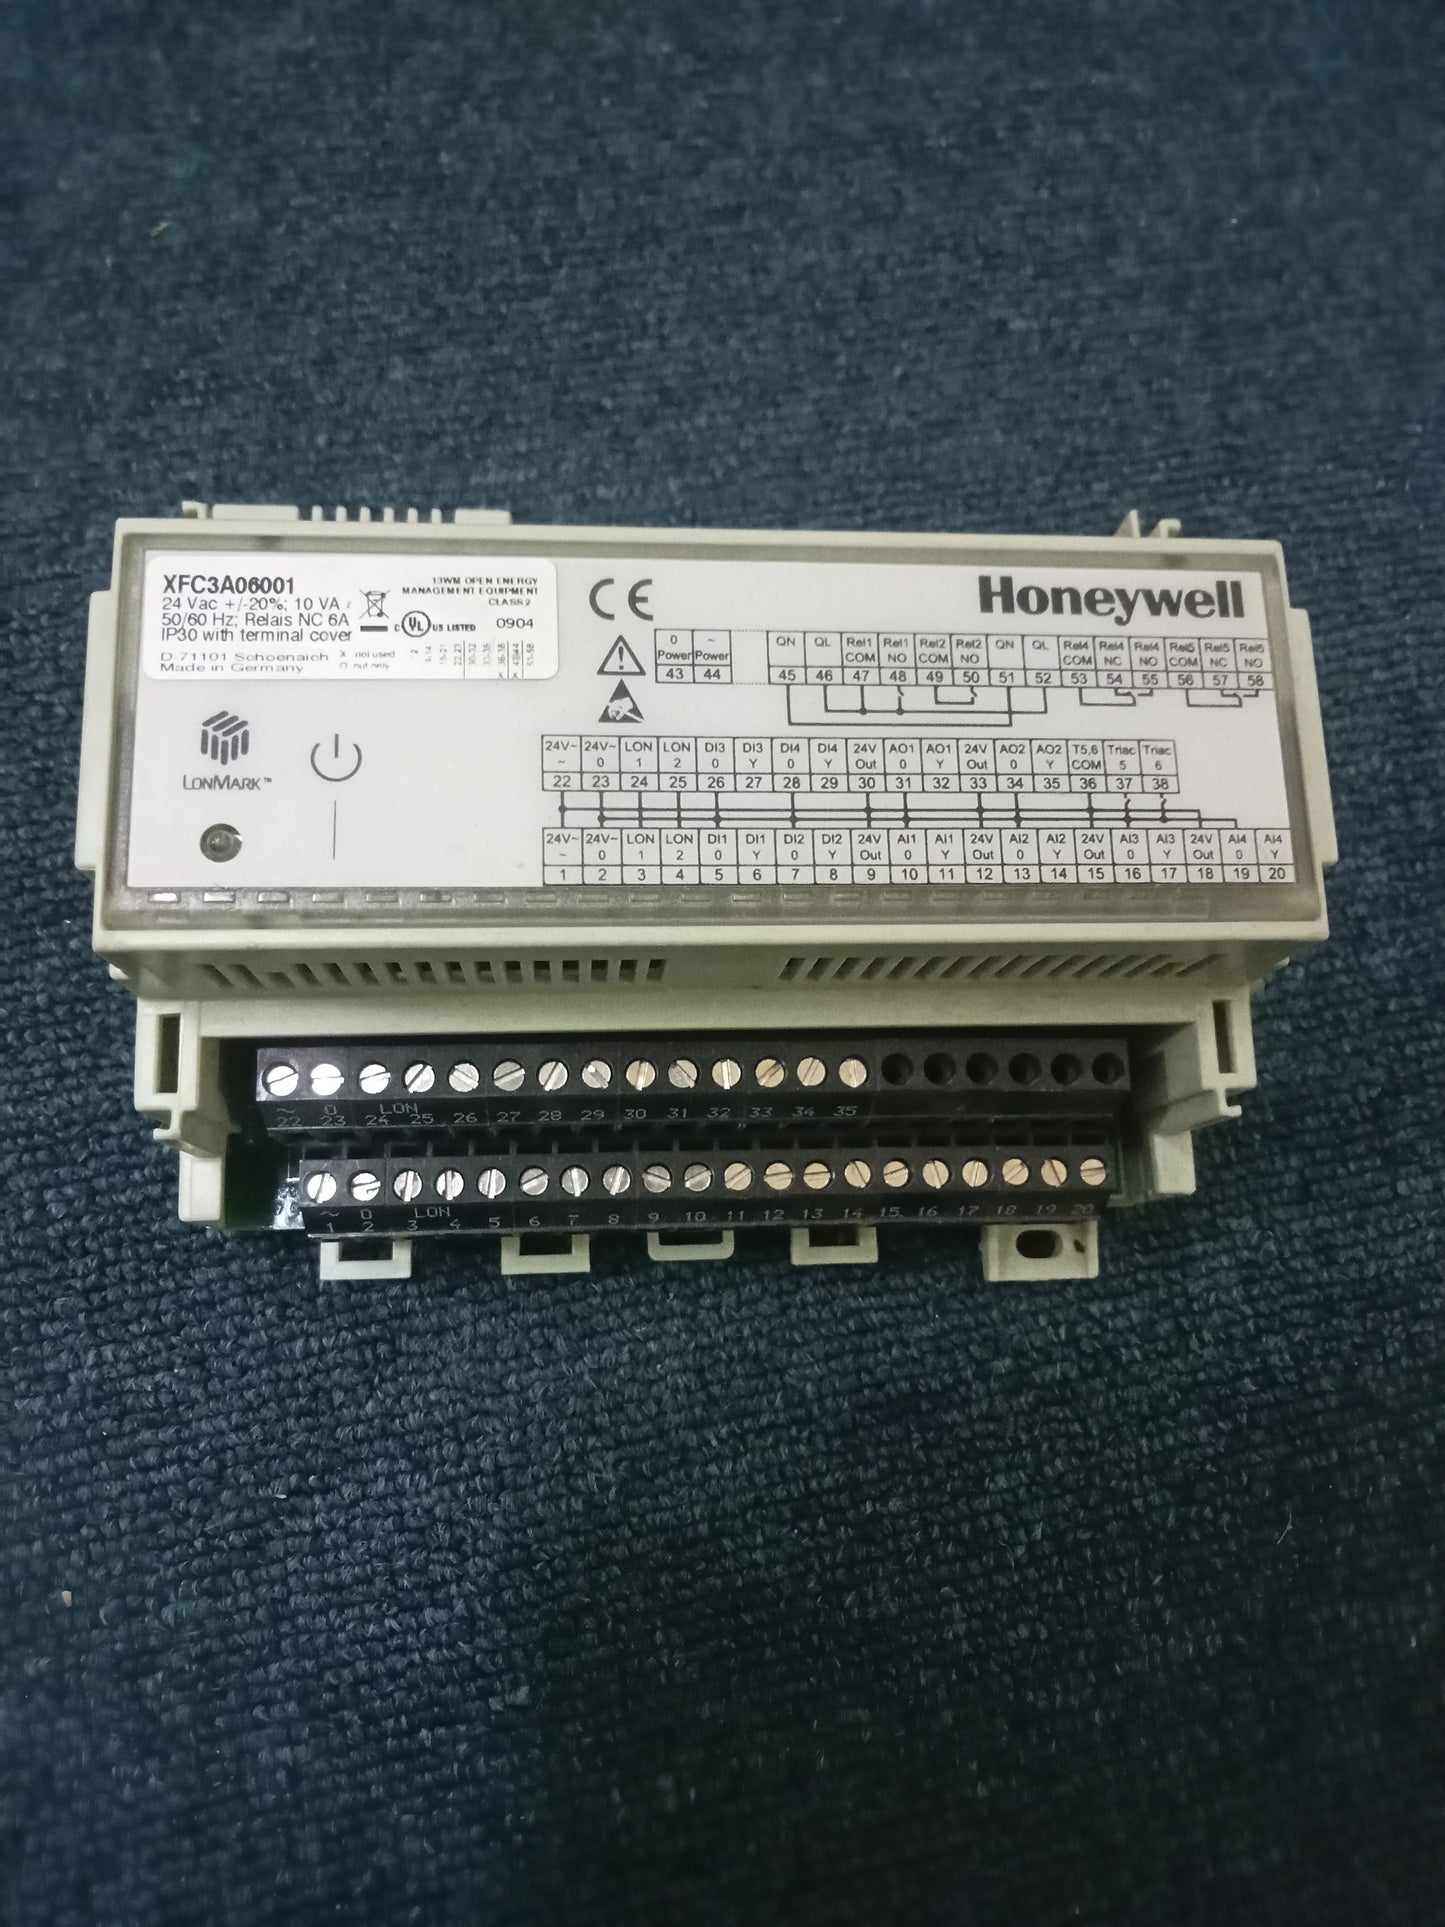 Honeywell XFC3A06001 SMART MODULE Lonmark 24 Vac 50/60 Hz IP30 Tested Working